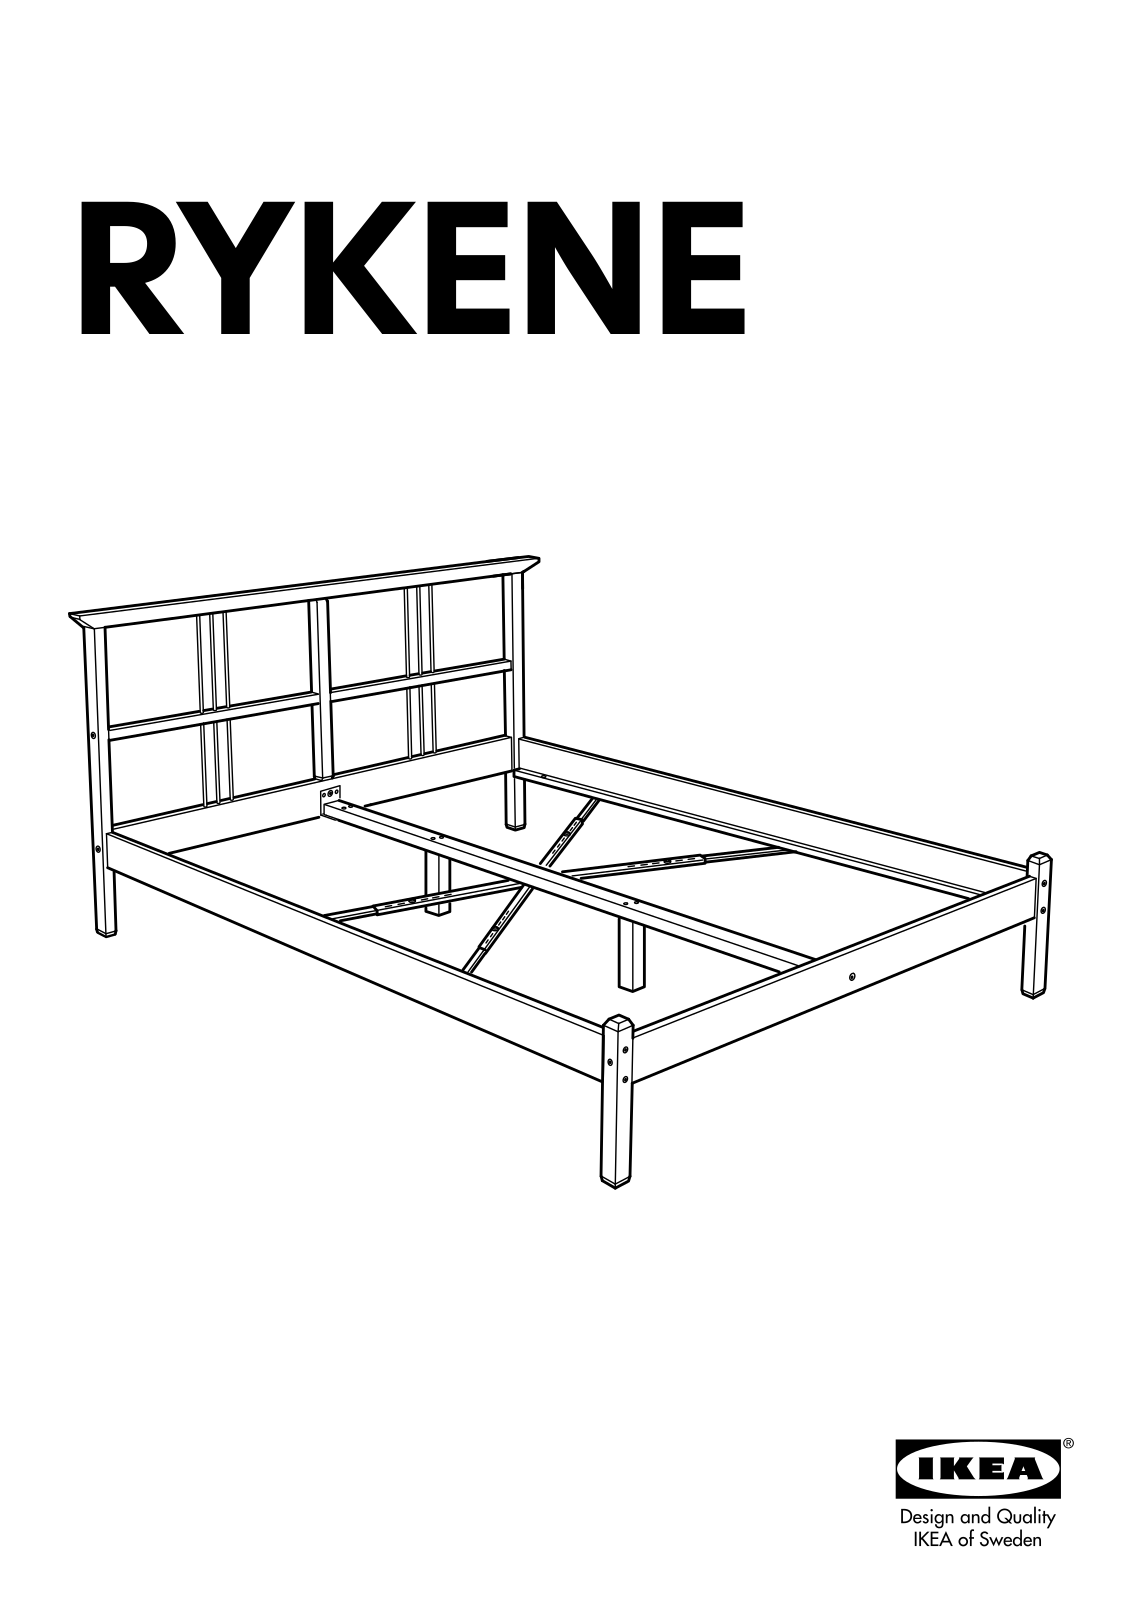 IKEA RYKENE User Manual